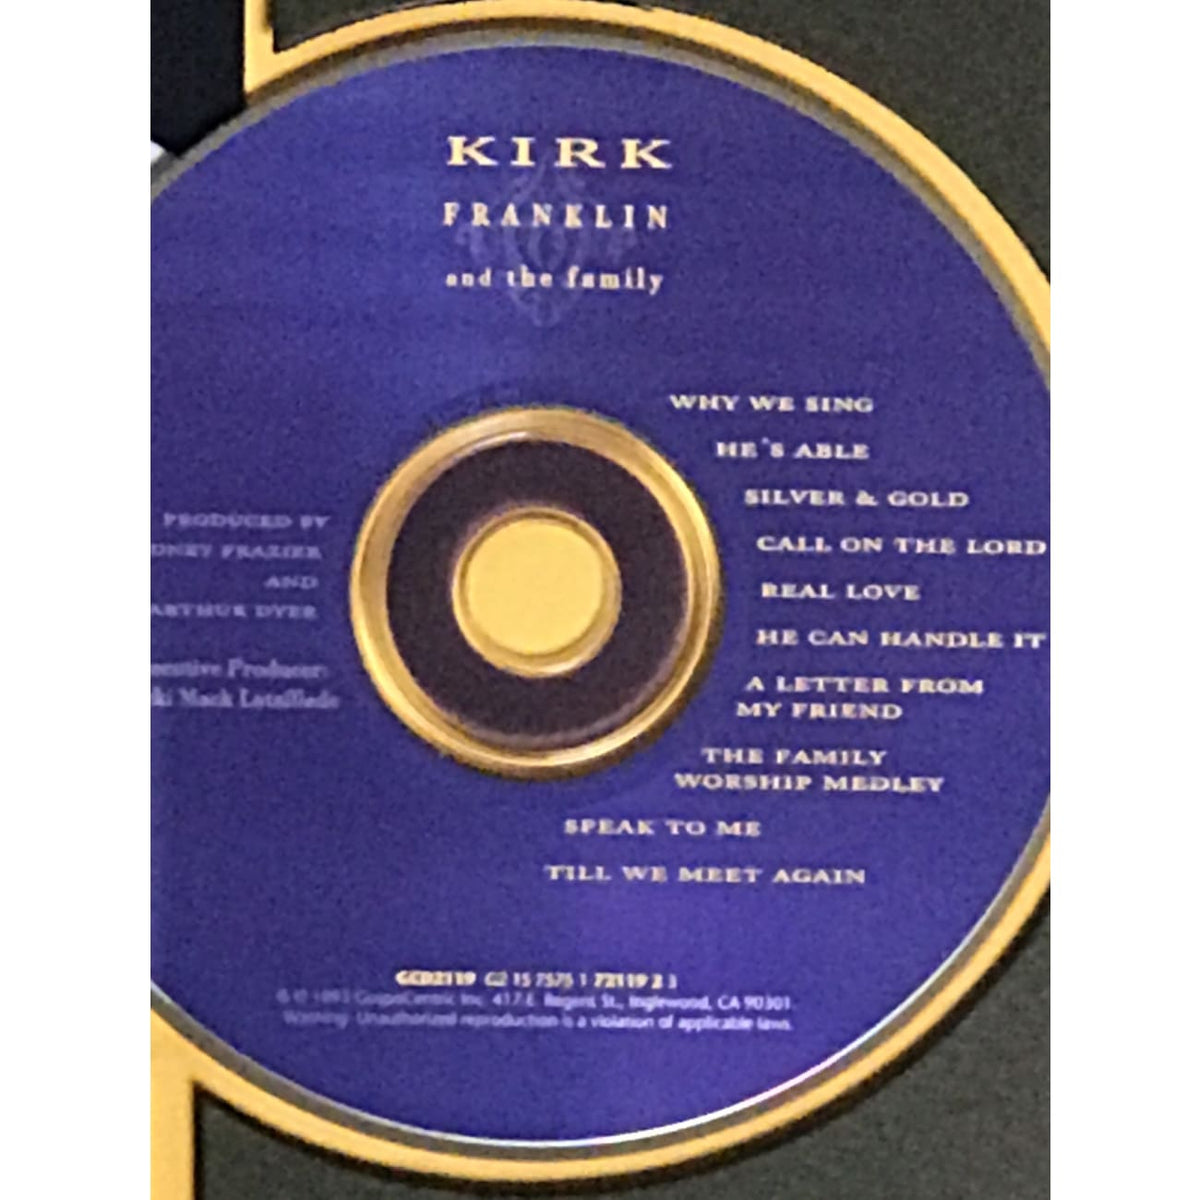 Kirk Franklin & the Family debut RIAA Gold Album Award